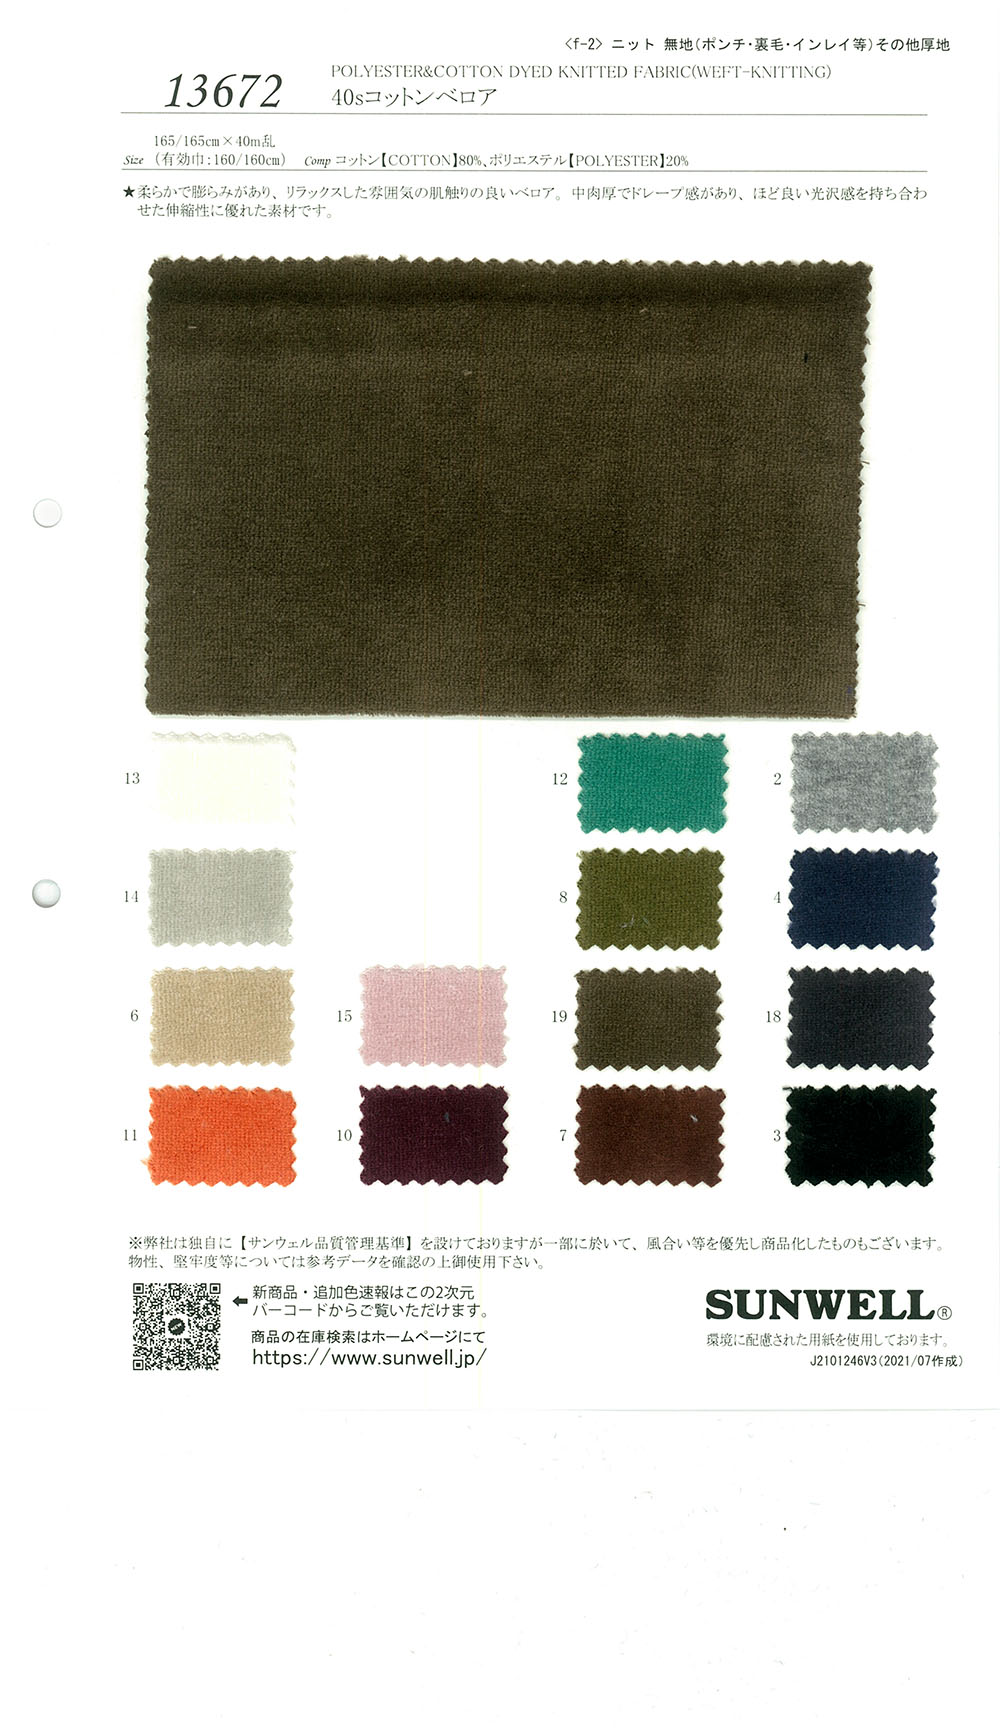 13672 40 Einfädiger Baumwollvelours[Textilgewebe] SUNWELL